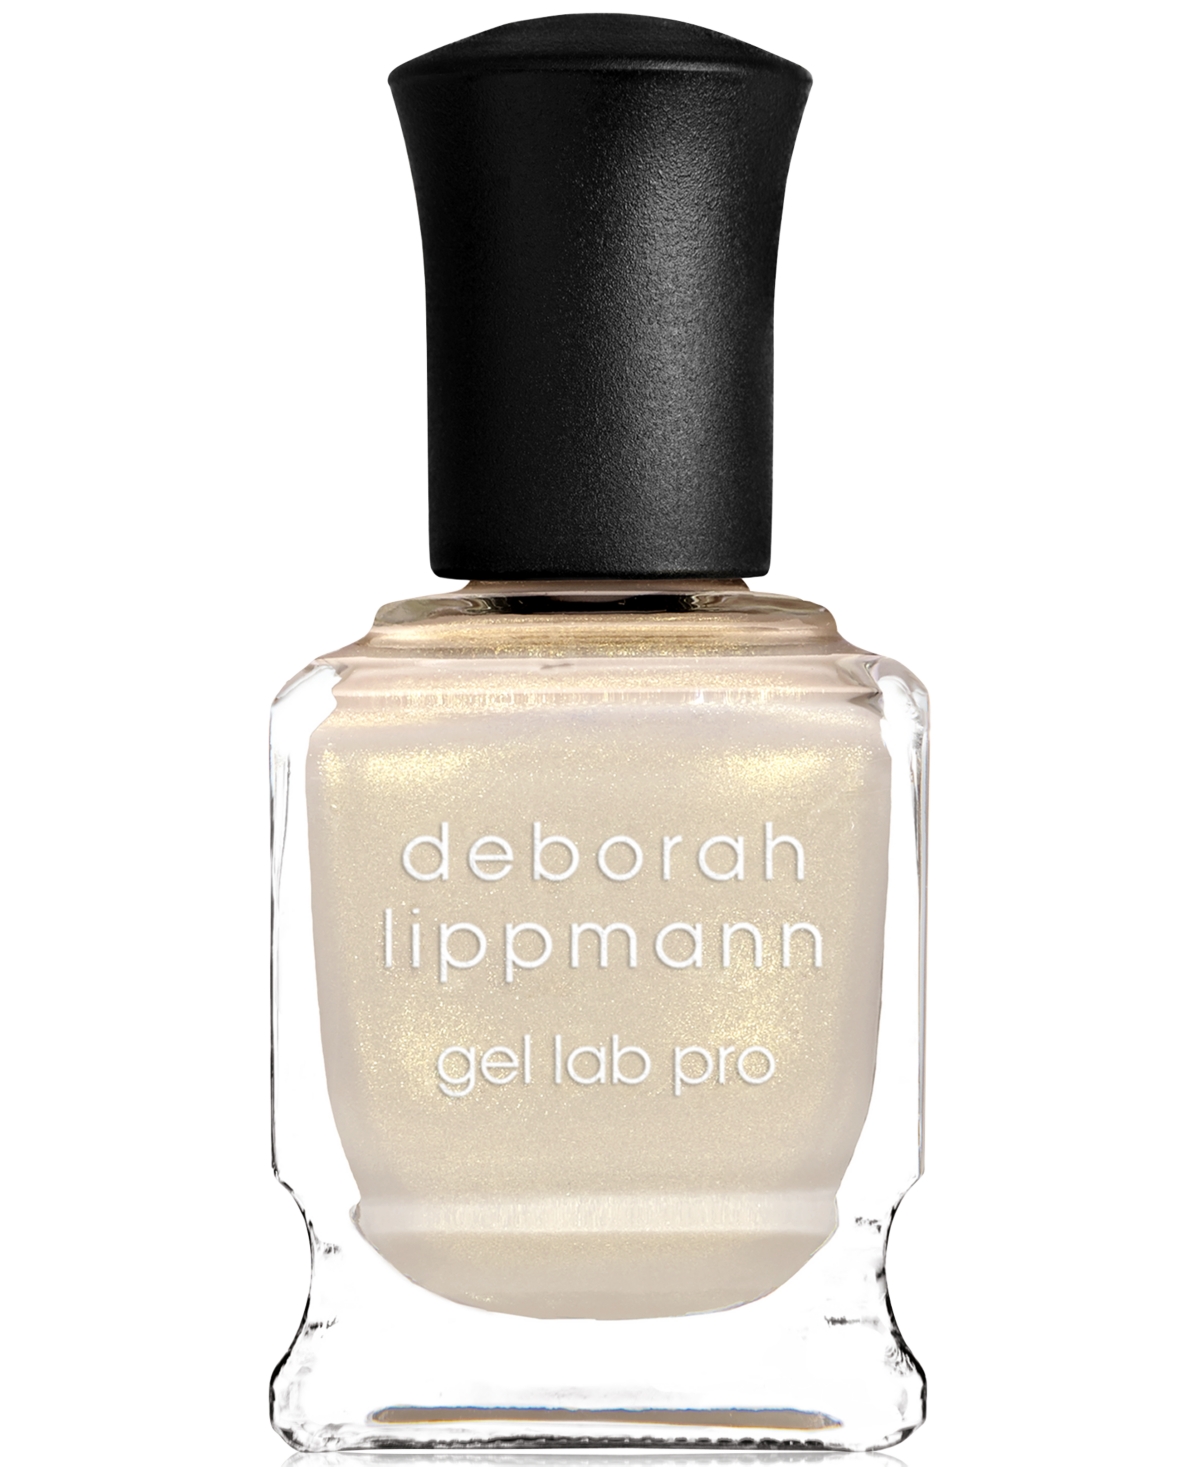 Deborah Lippmann Gel Lab Pro Nail Polish In The Sweetest Taboo